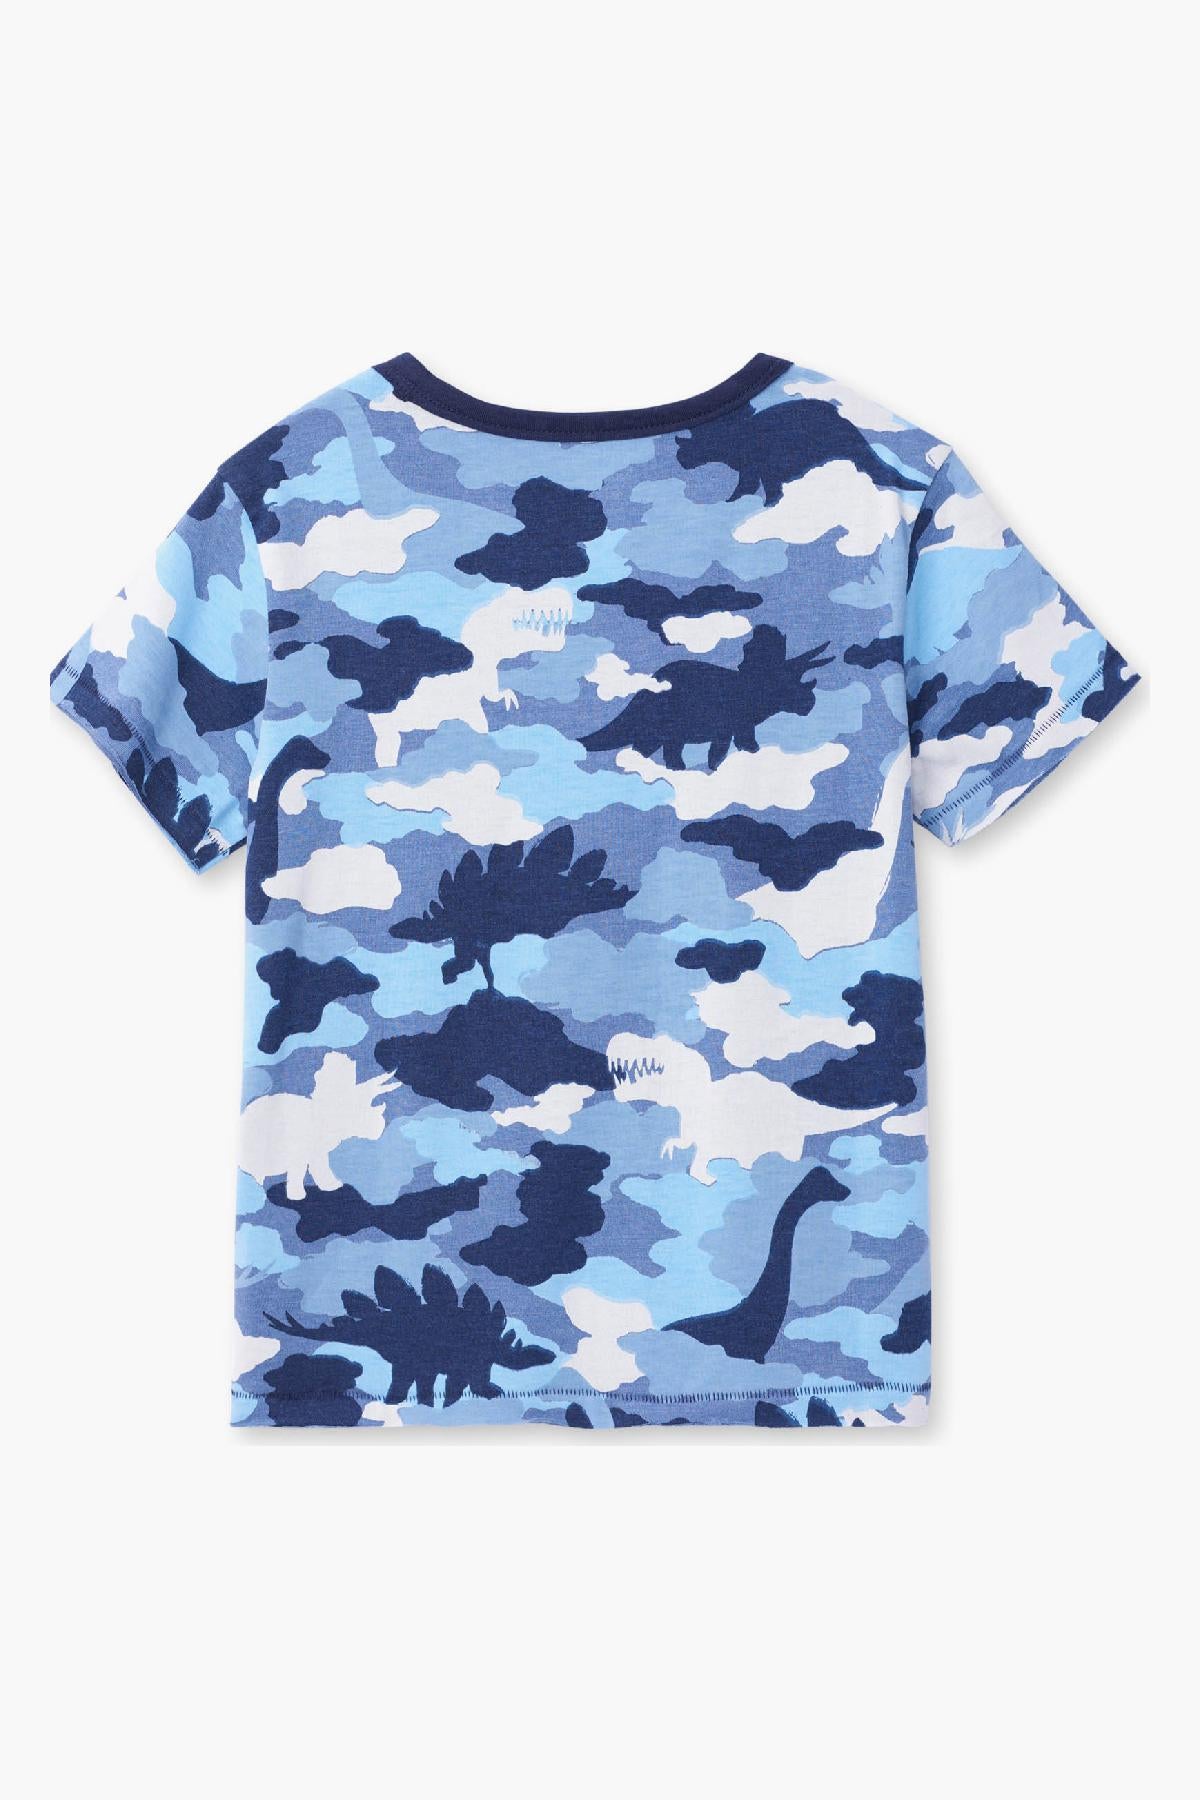 Hatley Dinosaur Camo Boys T-Shirt (Size 3 left) – Mini Ruby